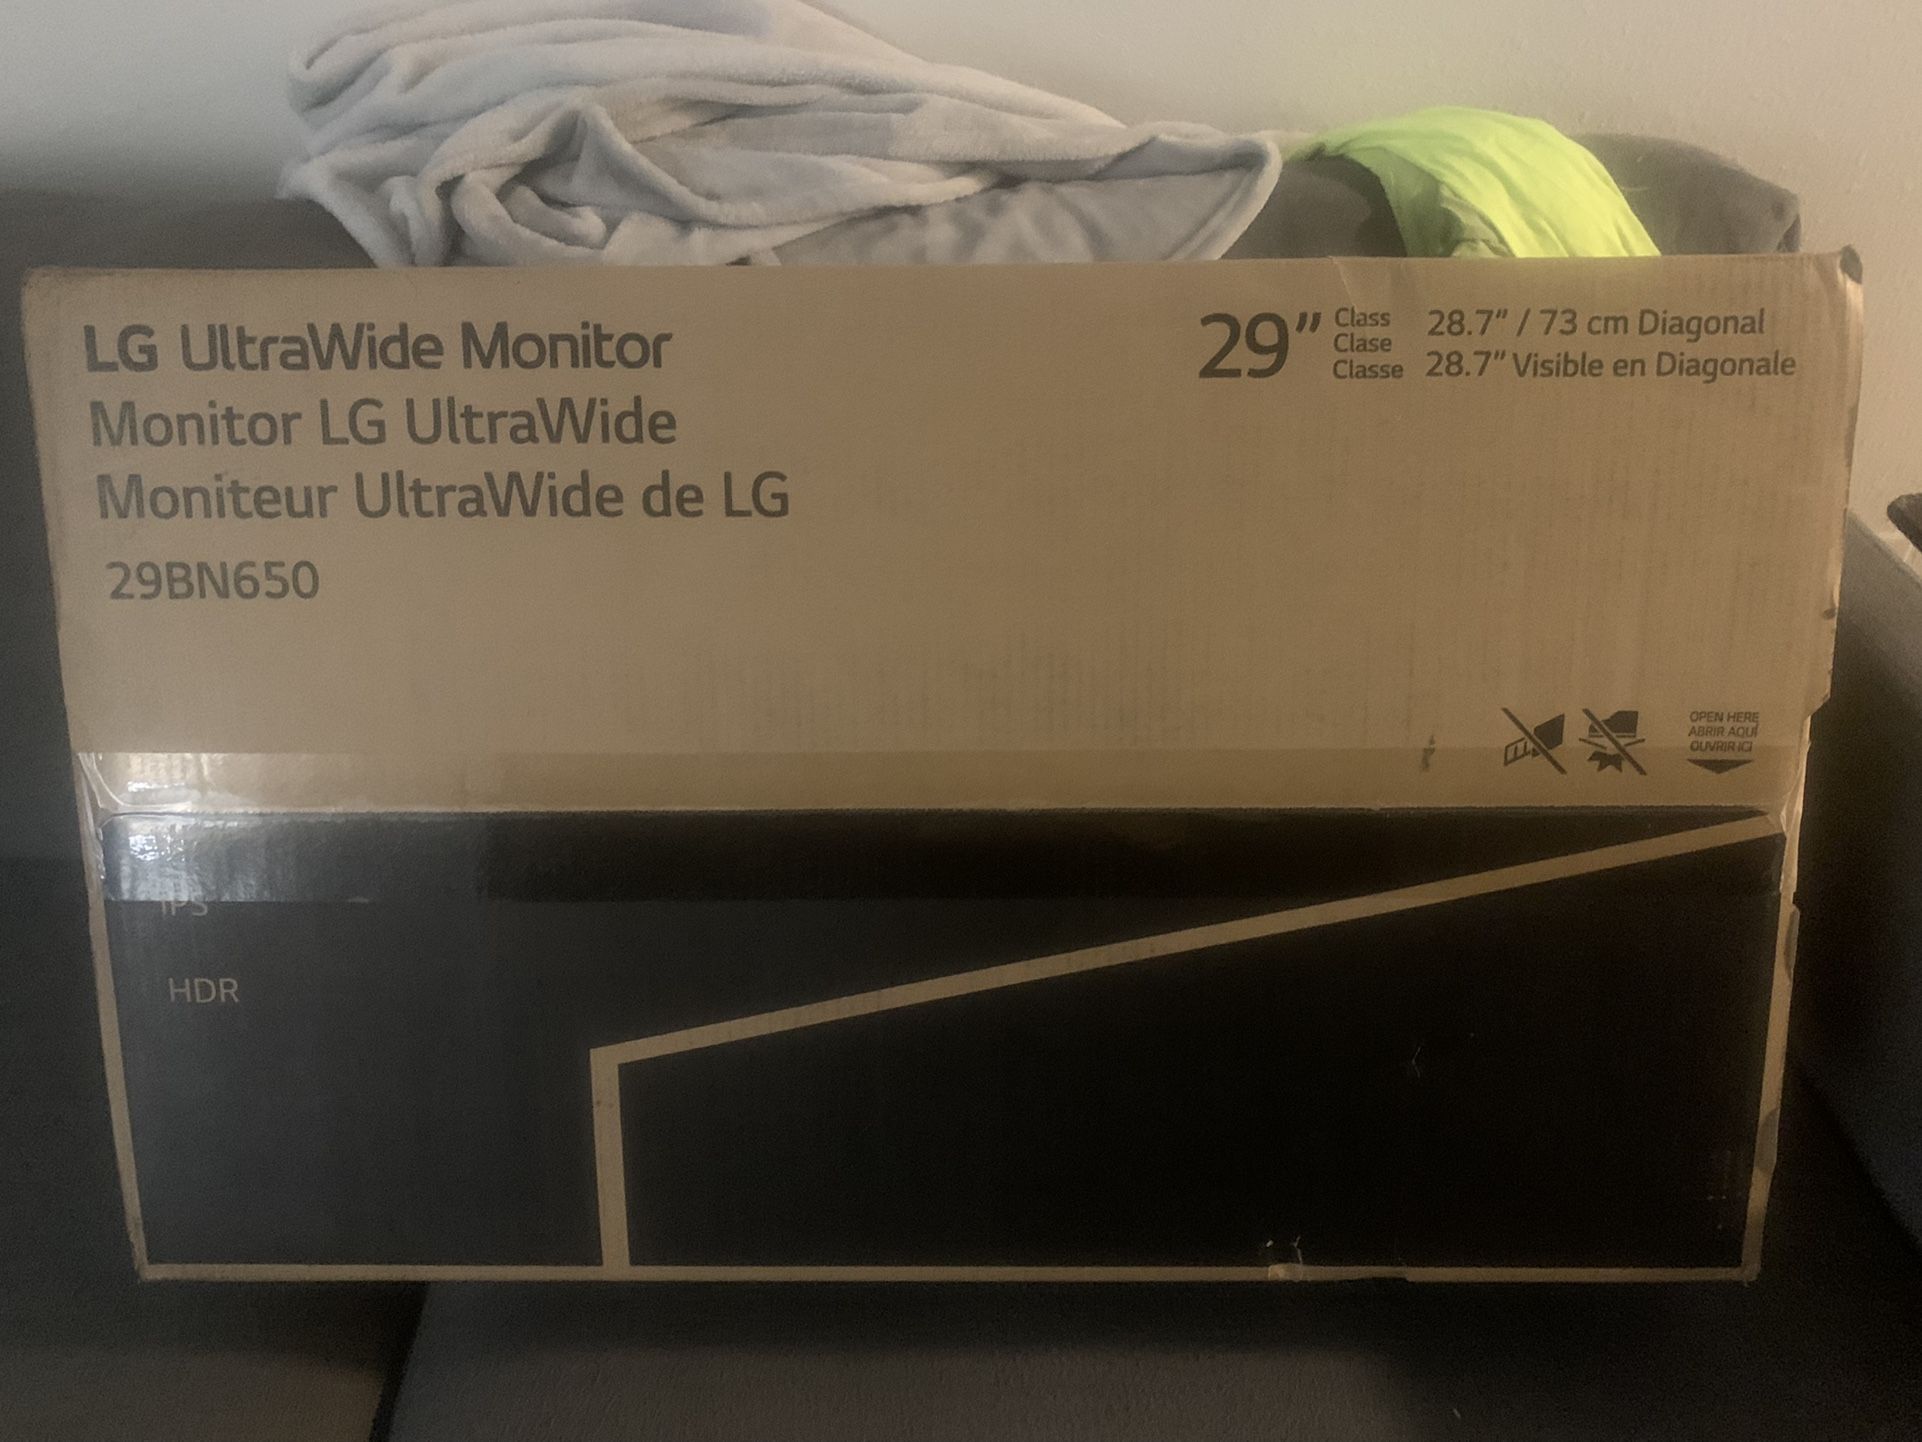 LG UltraWide Monitor - 29”